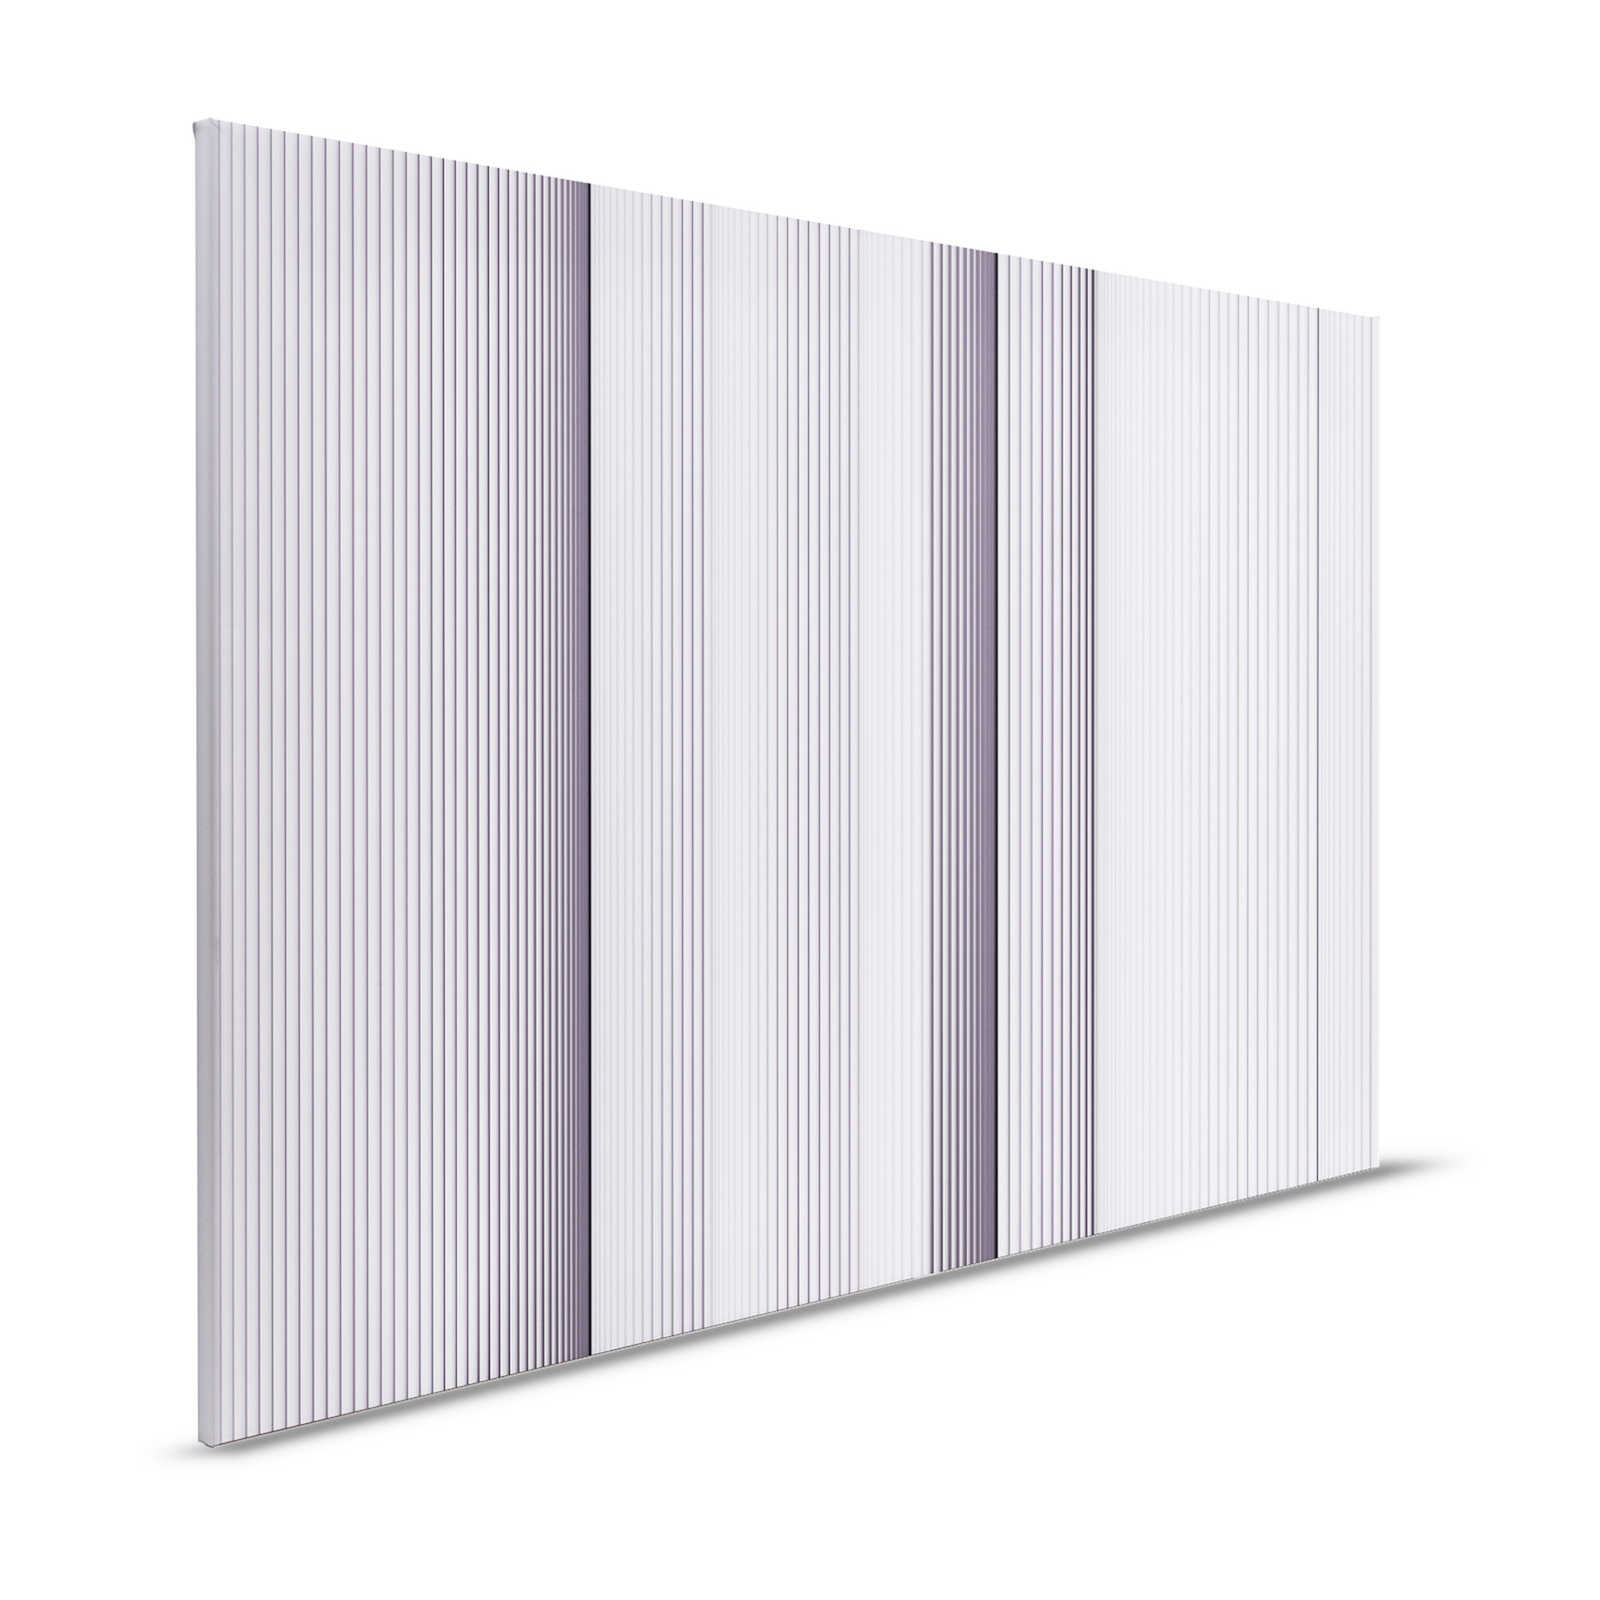 Magic Wall 1 - Stripe Canvas Painting 3D Illusion Effect, Purple & White - 1.20 m x 0.80 m
